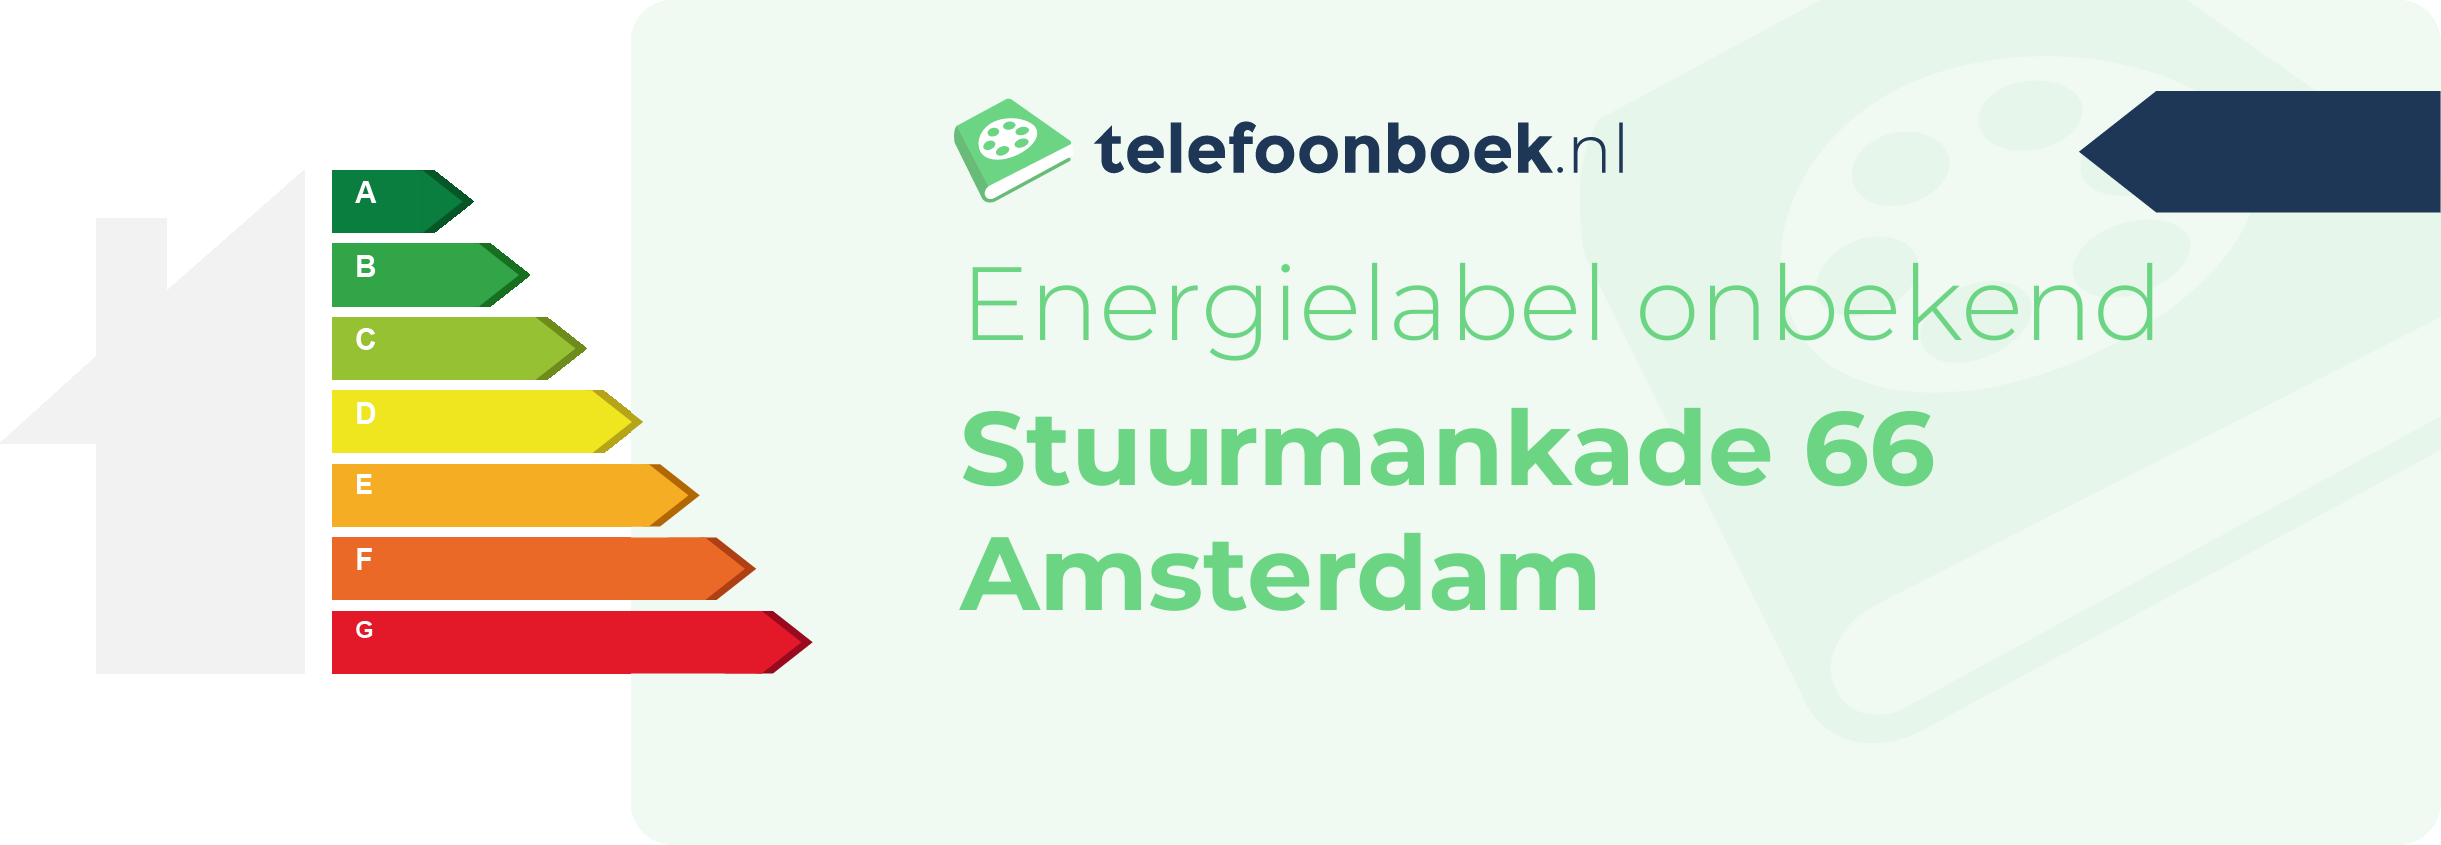 Energielabel Stuurmankade 66 Amsterdam